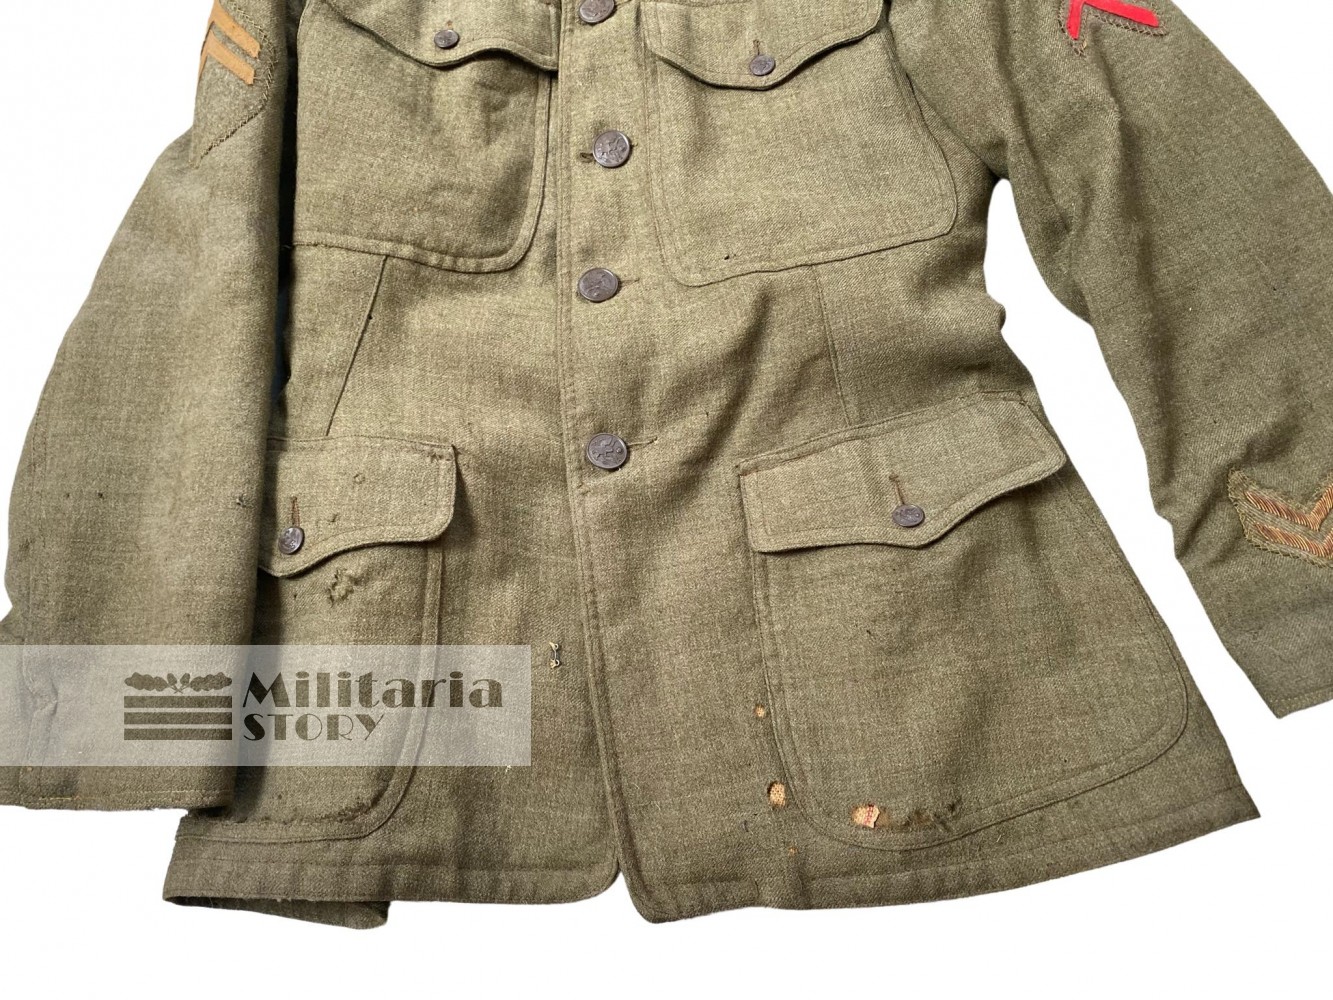 WWI U.S. 78TH division set named - WWI U.S. 78TH division set named: pre-war Allied Uniforms